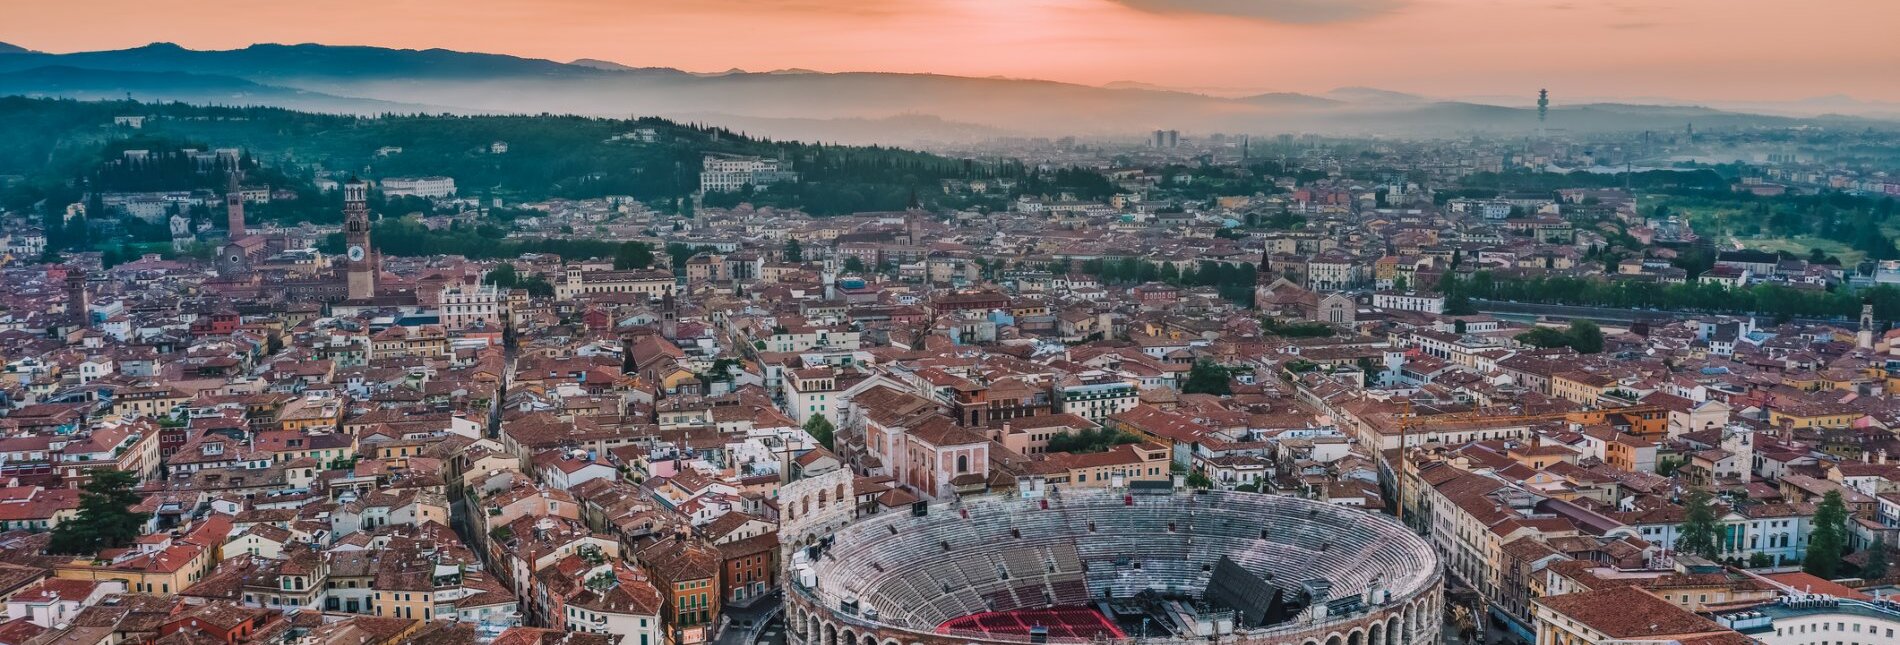 Blick auf Verona und Arena di Verona